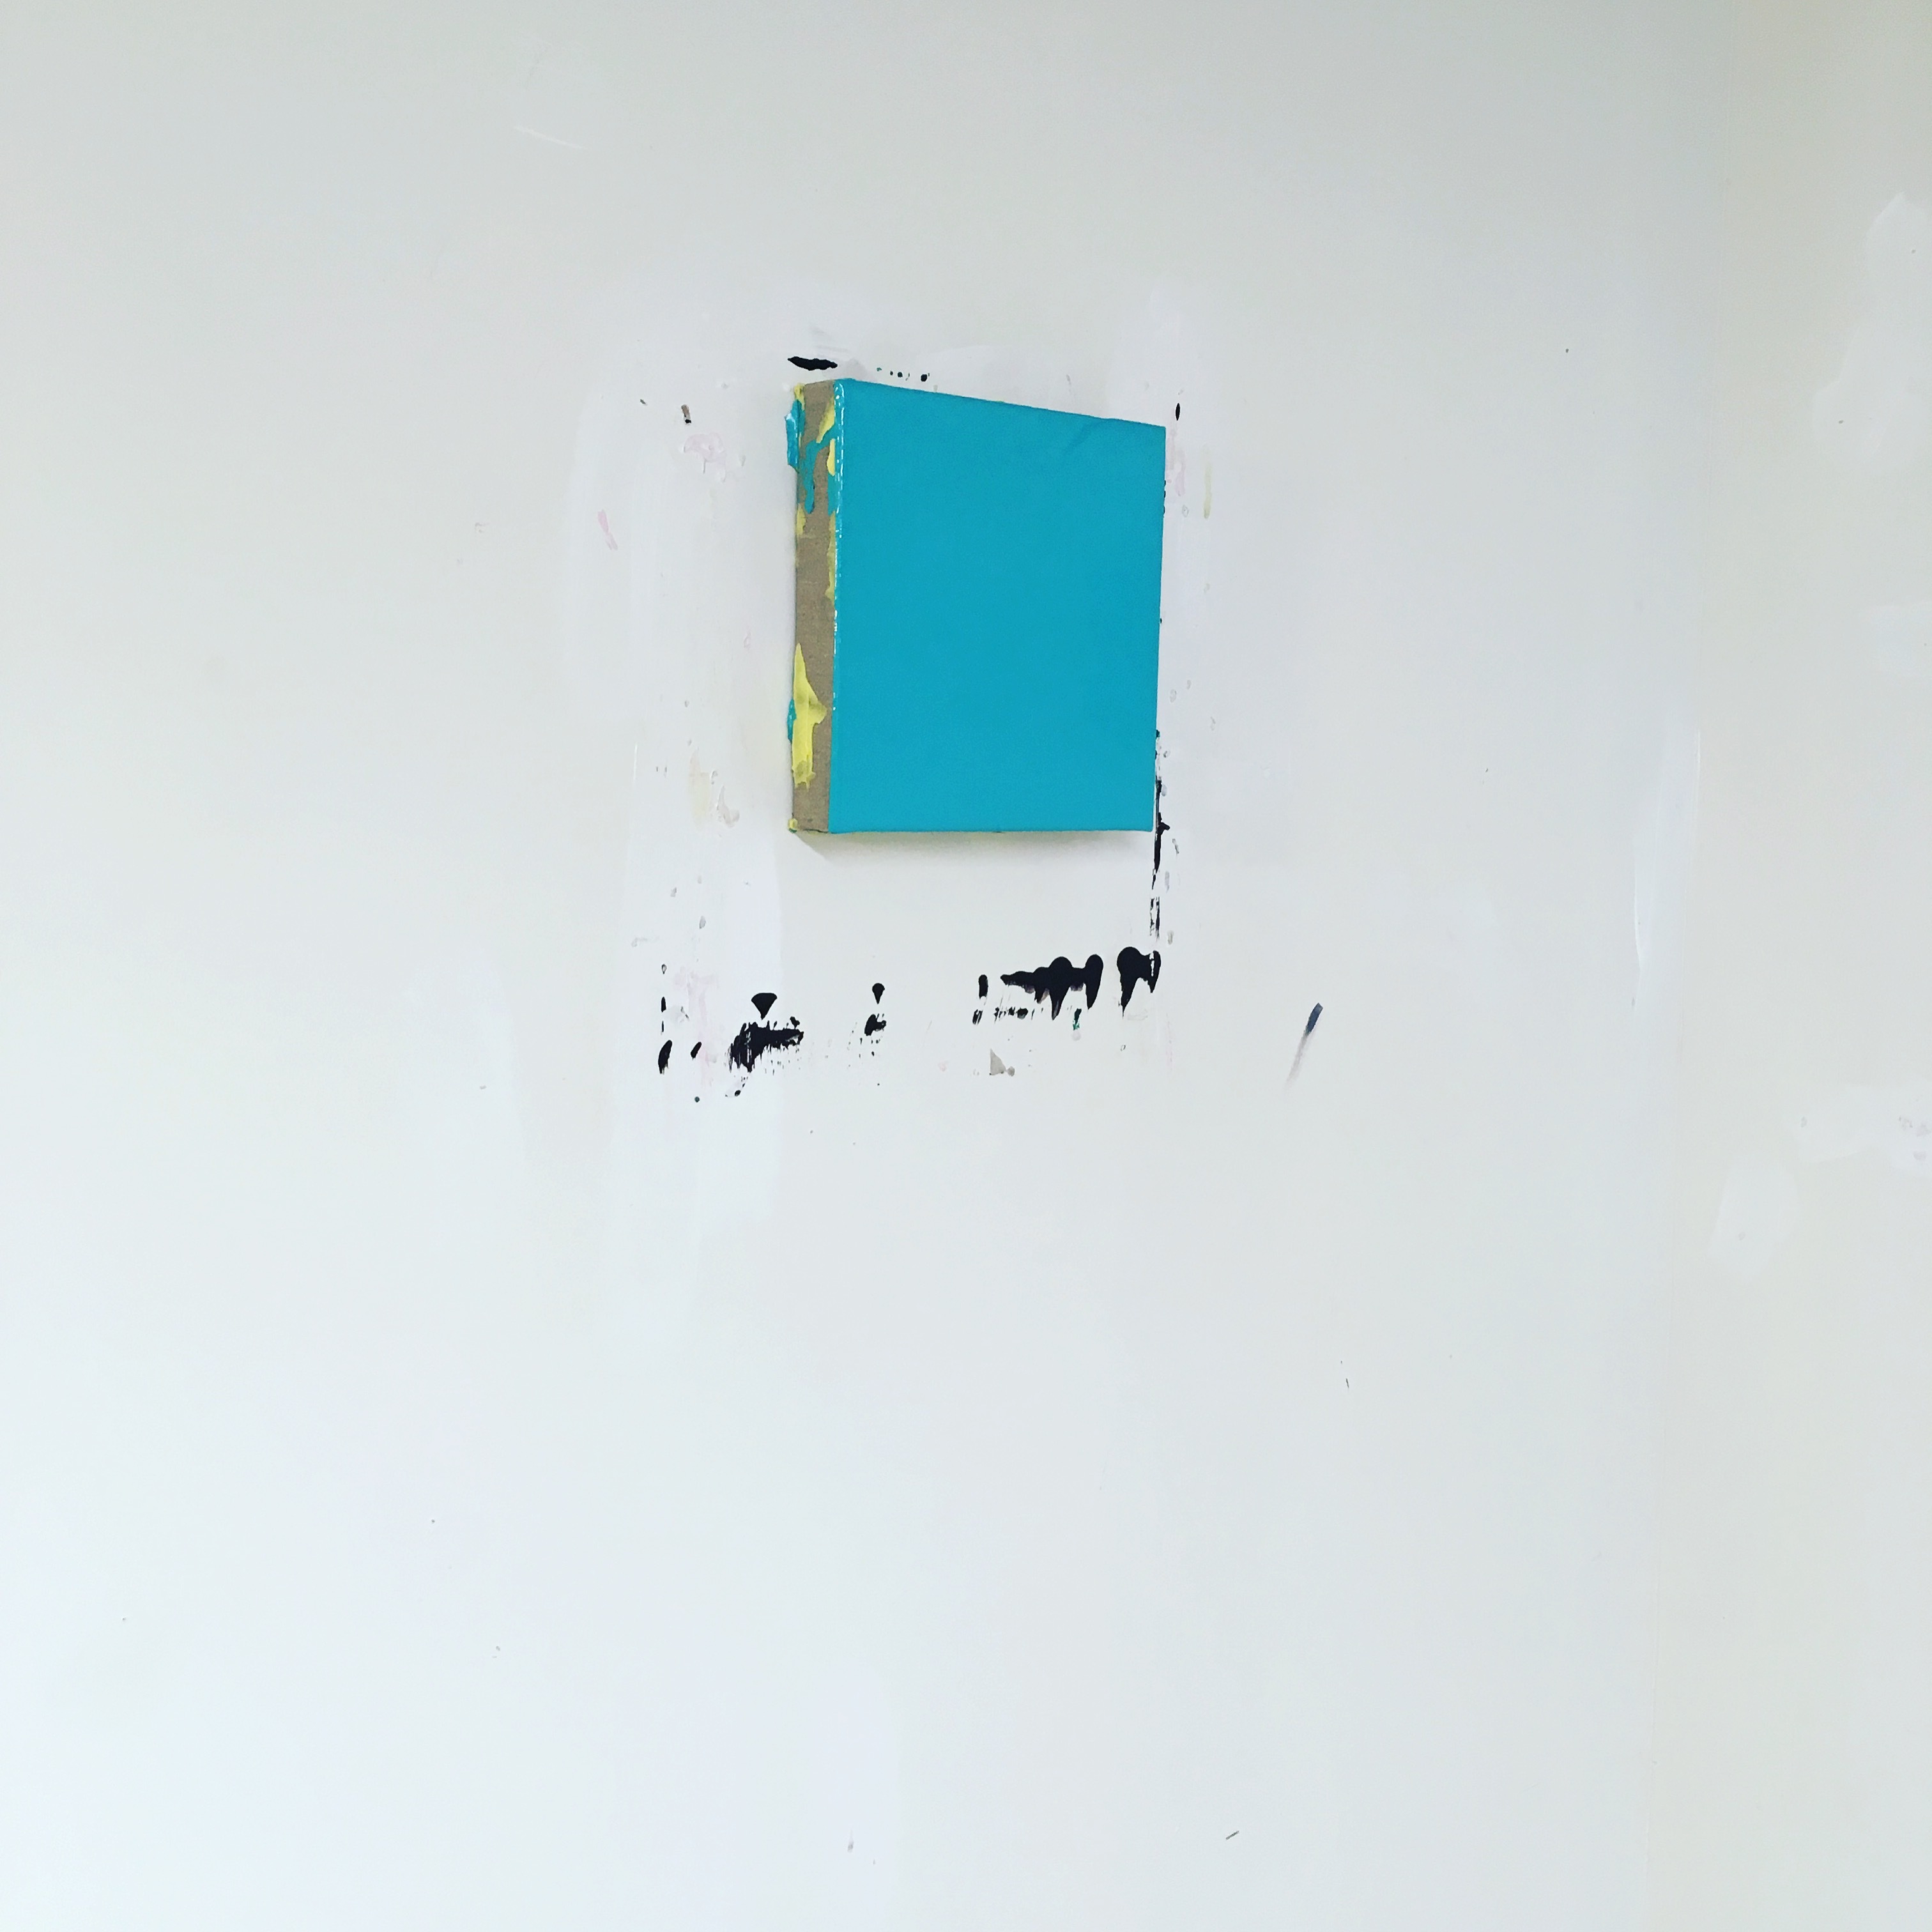 John Tallman, Untitled (teal), acrylic and urethane plastic on linen, 8"x8", 2017